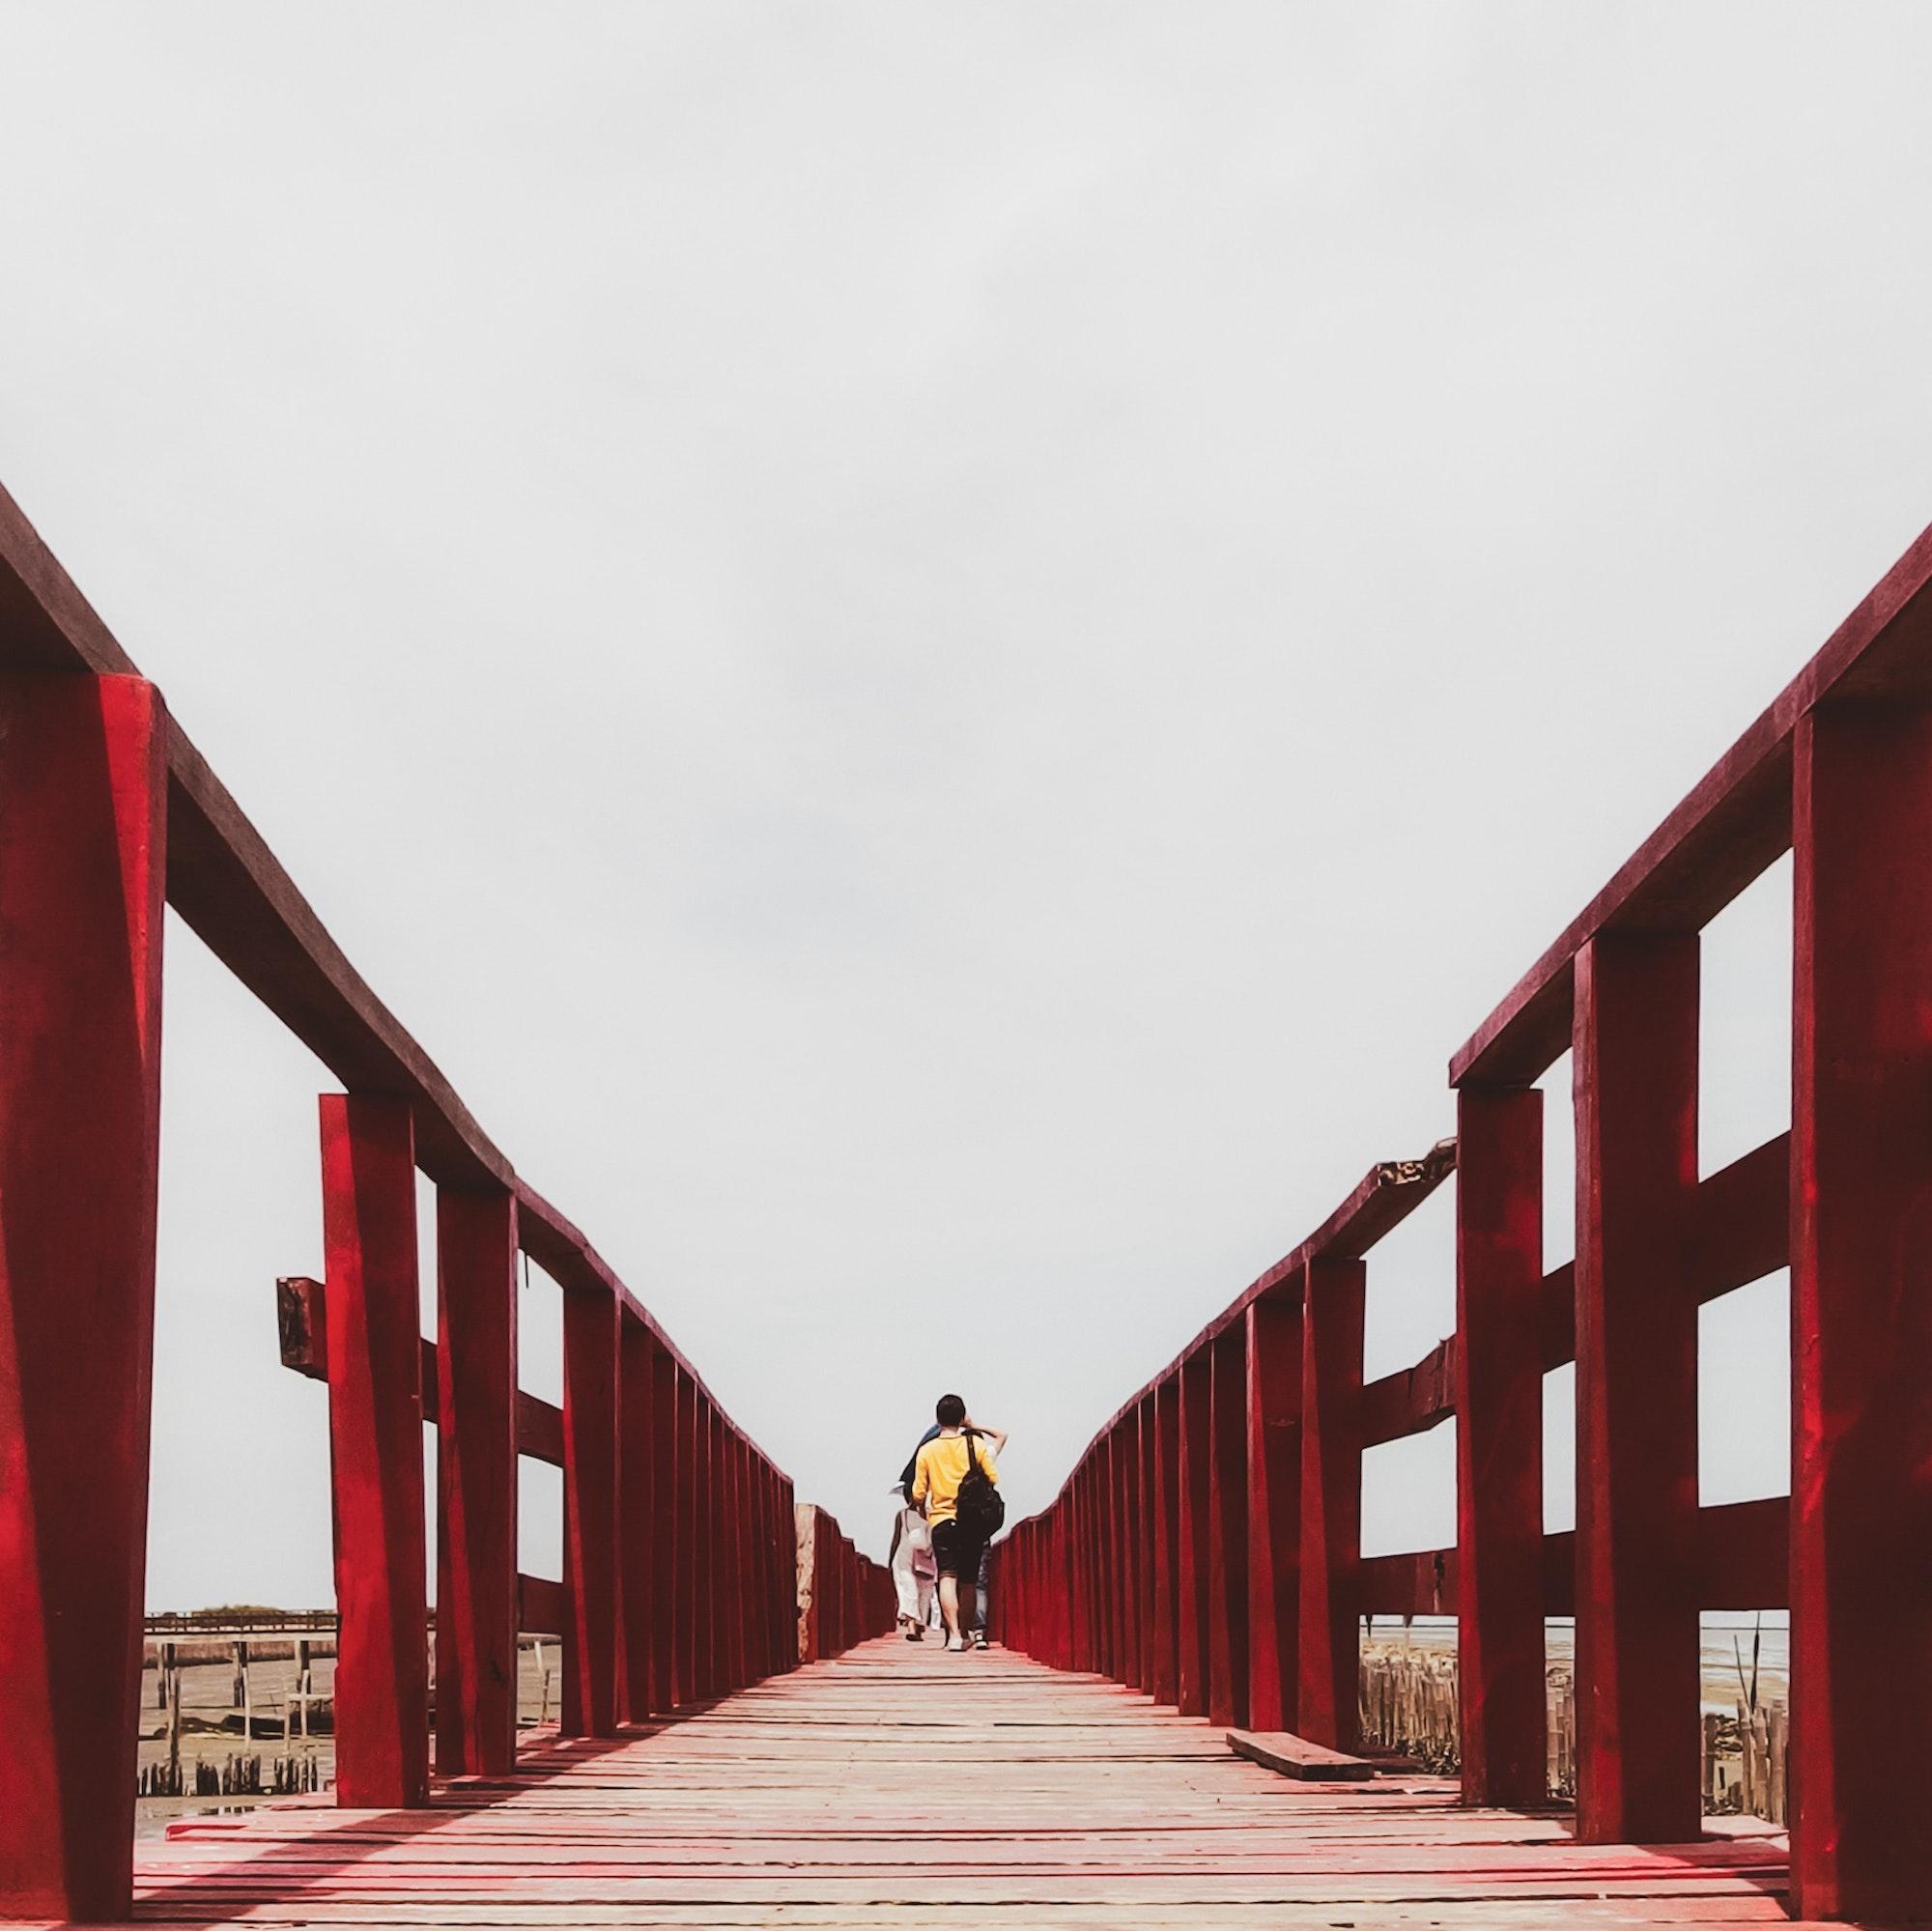 A man wearing yellow t-shirt walk on red bridge